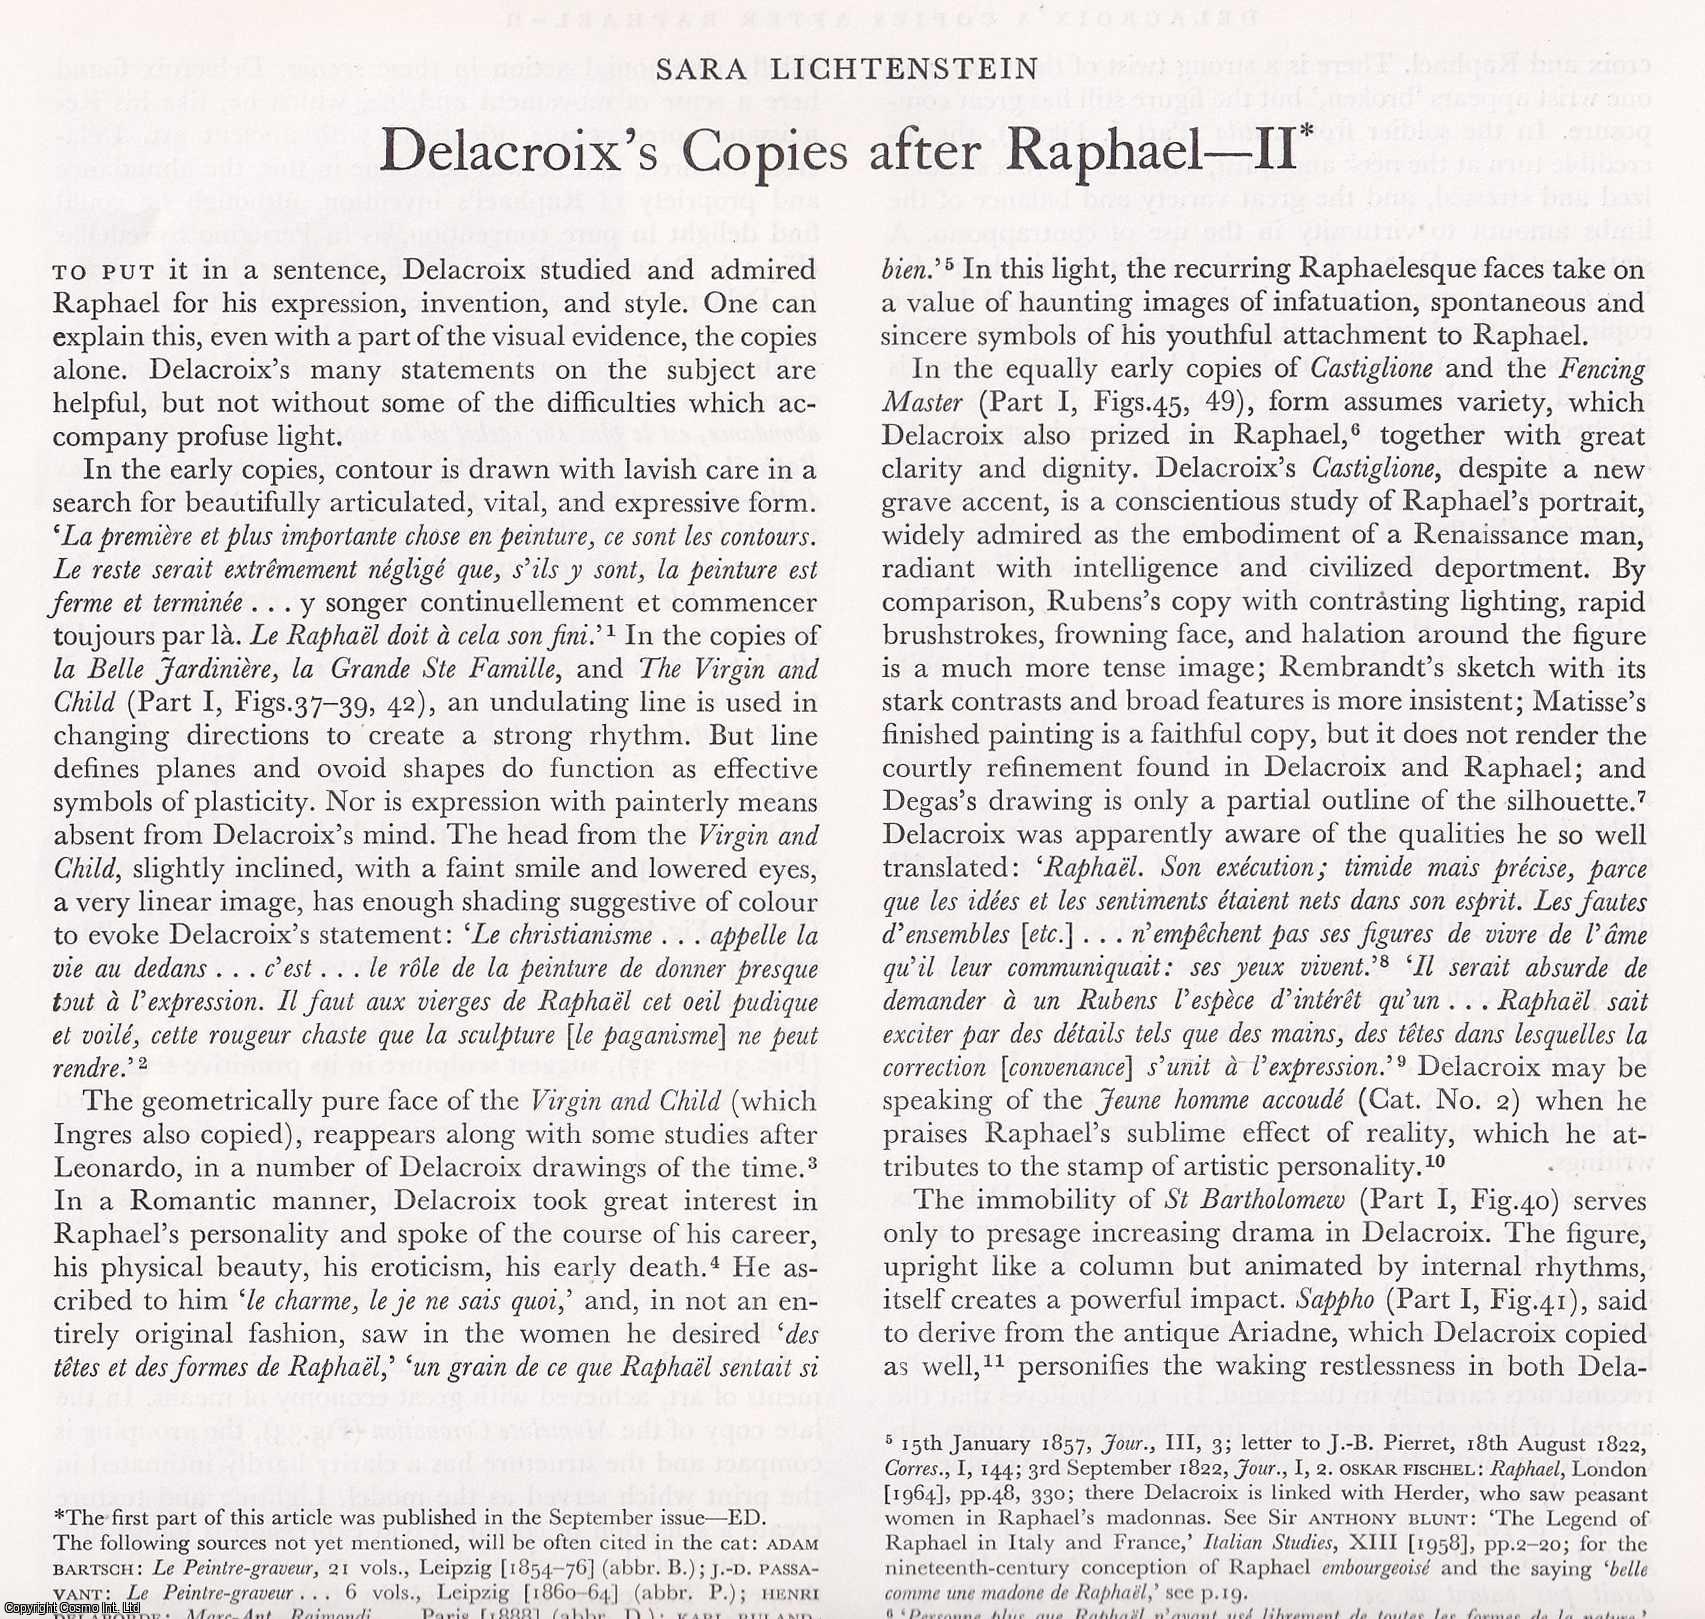 Sara Lichtenstein - Delacroix' Copies after Raphael, Part 2 only. An original article from The Burlington Magazine, 1971.